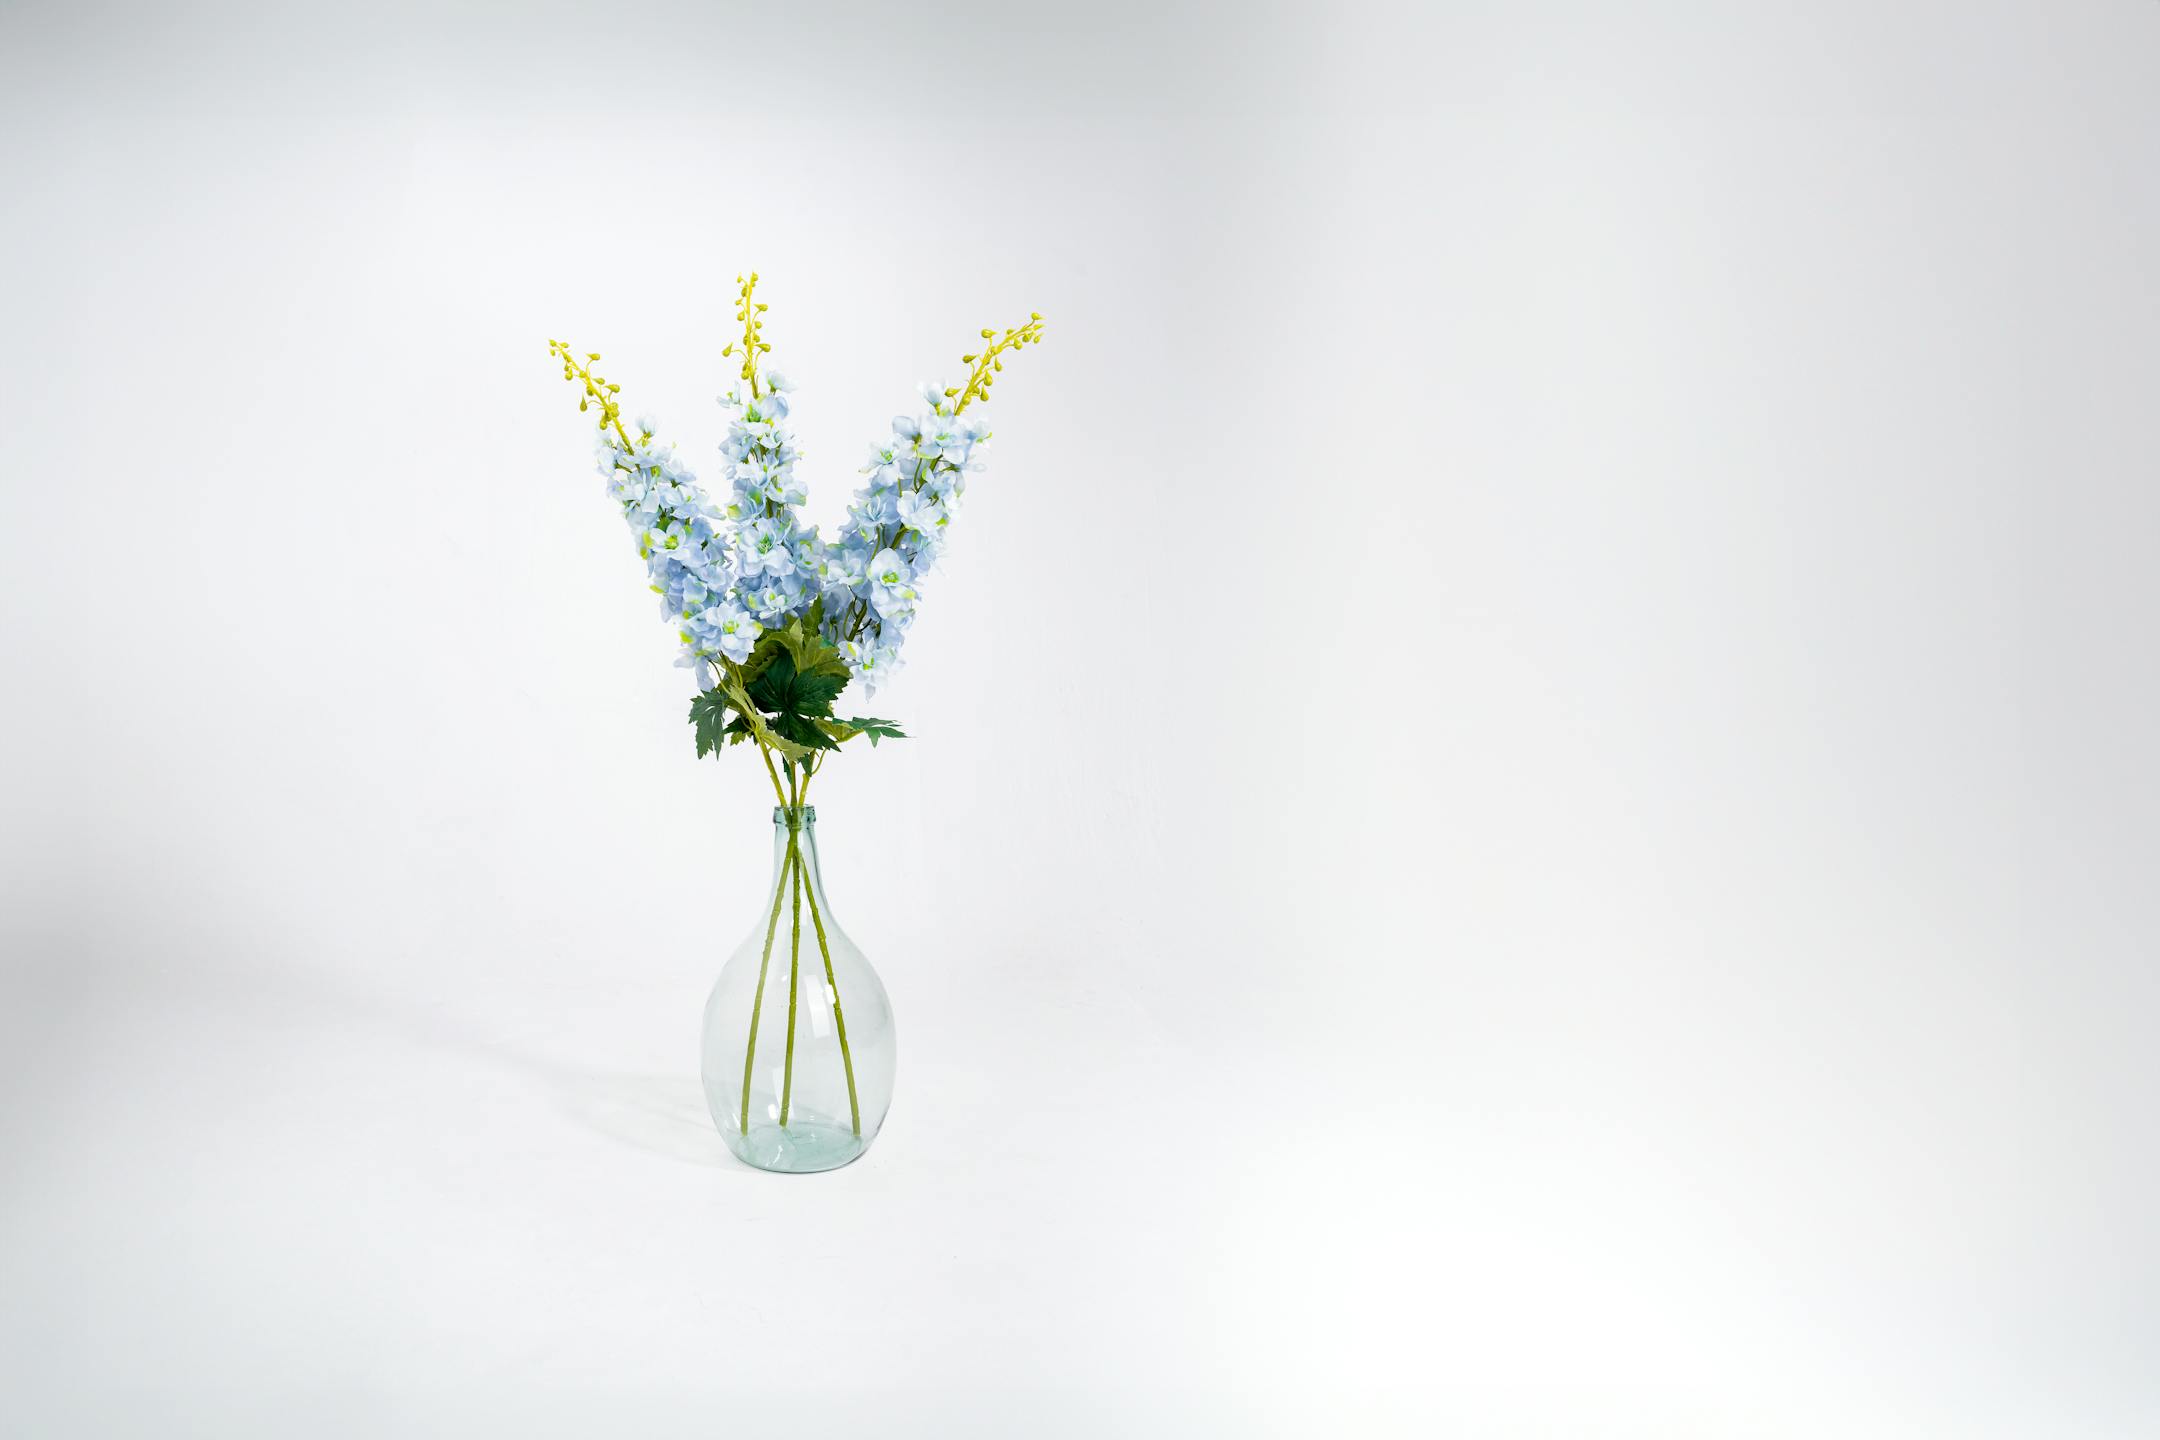 Blue artificial delphinium stems in glass vase